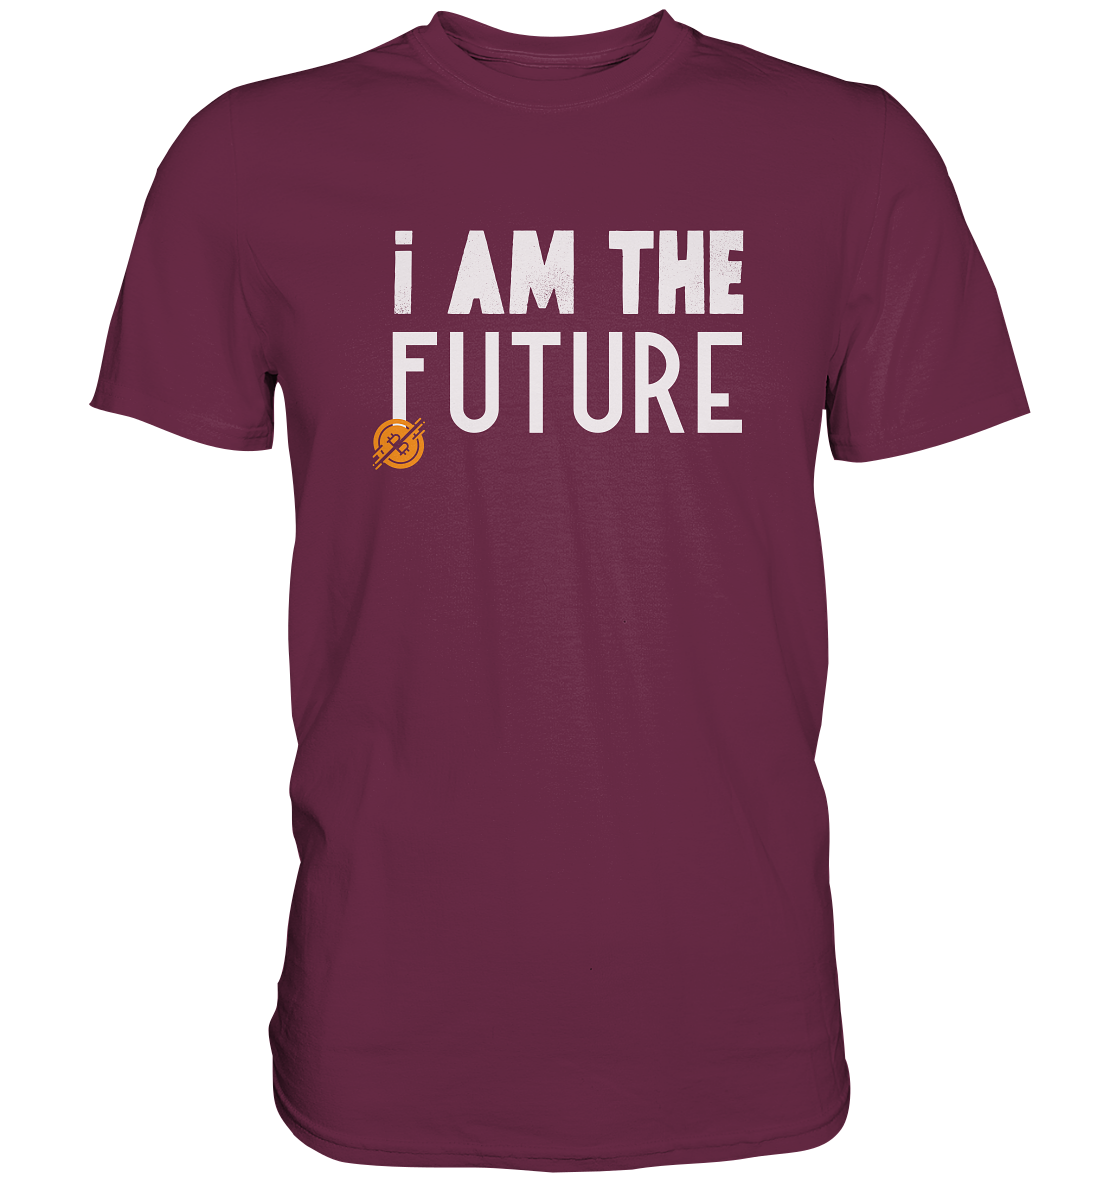 Bitcoin T-Shirt "I am the future" - Premium T-Shirt